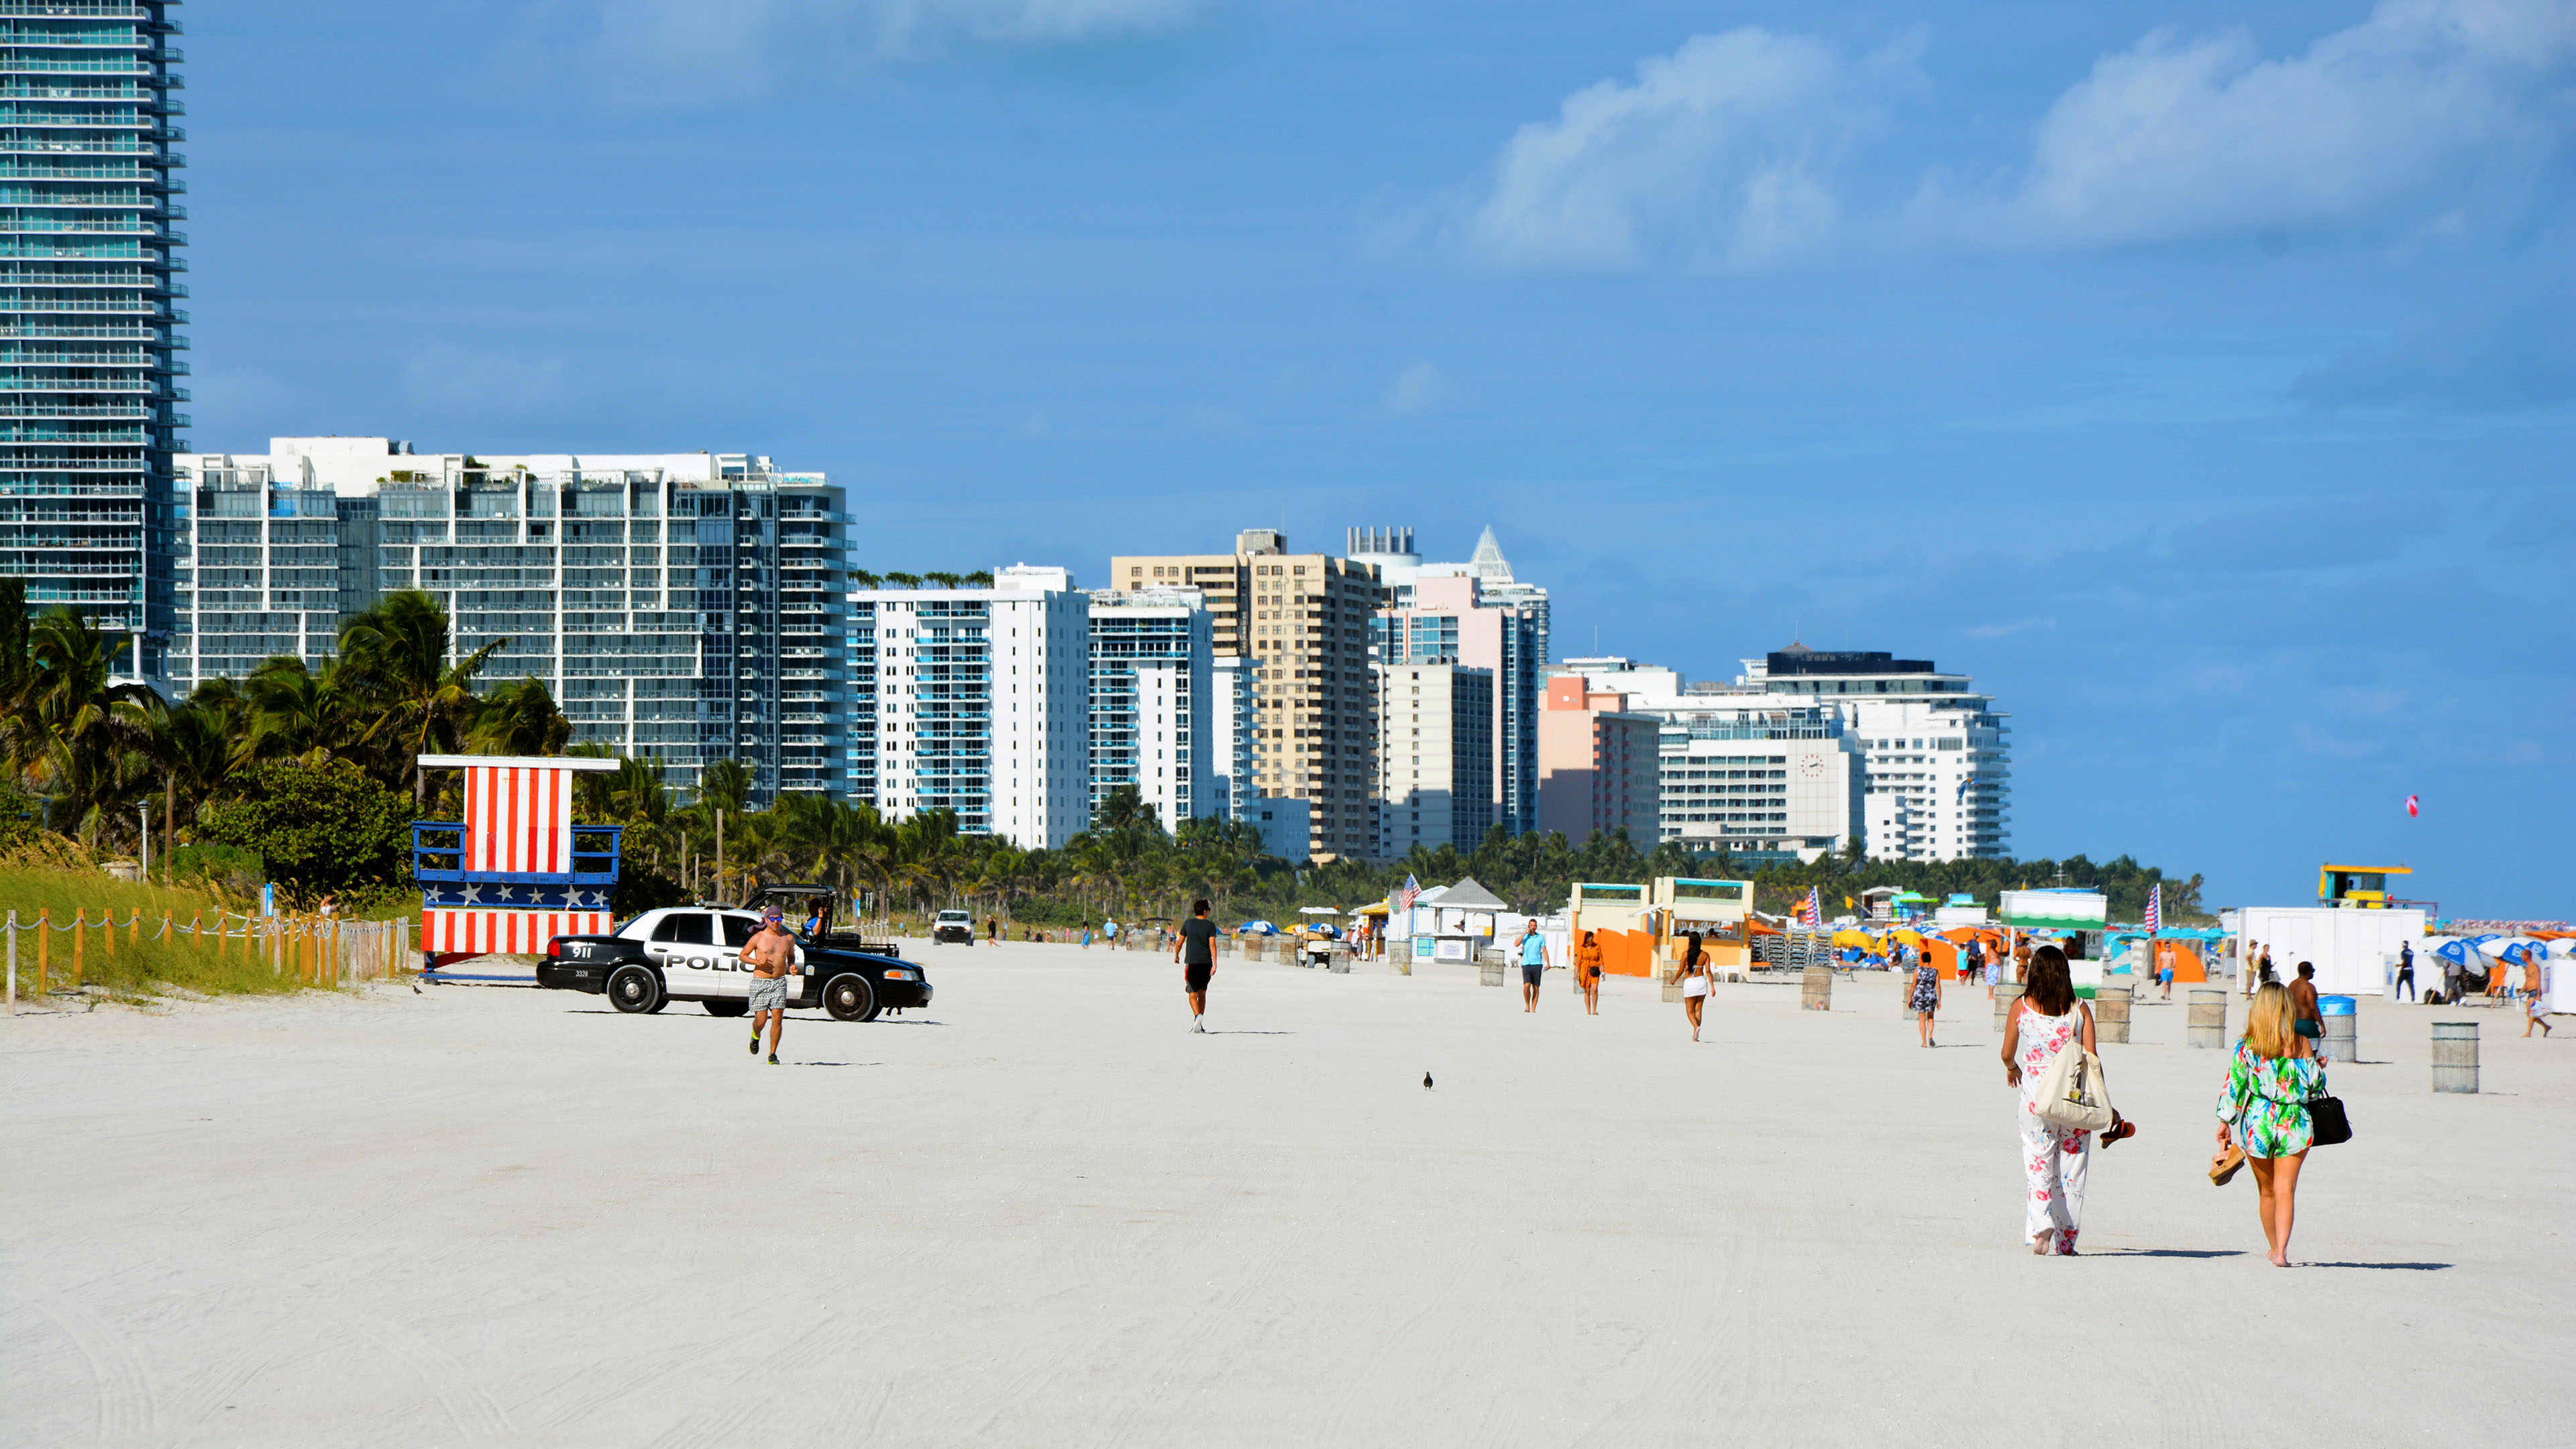 Skyline of Miami Beach from the beach